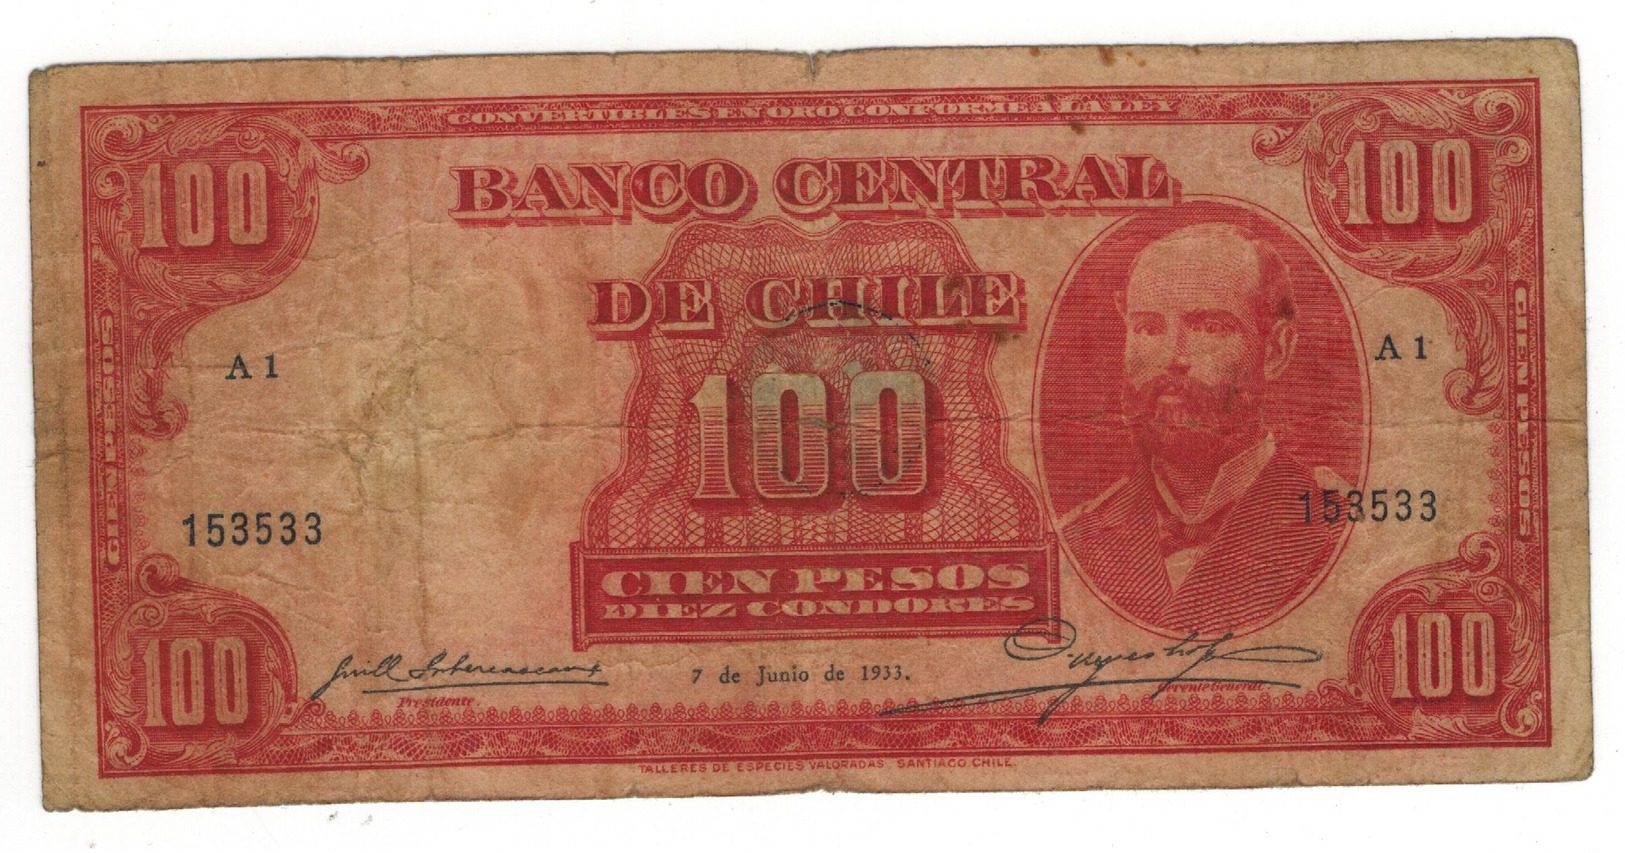 Chile 100 Pesos / 10 Condores, 1933, G/F Dirt. Rare. - Chile